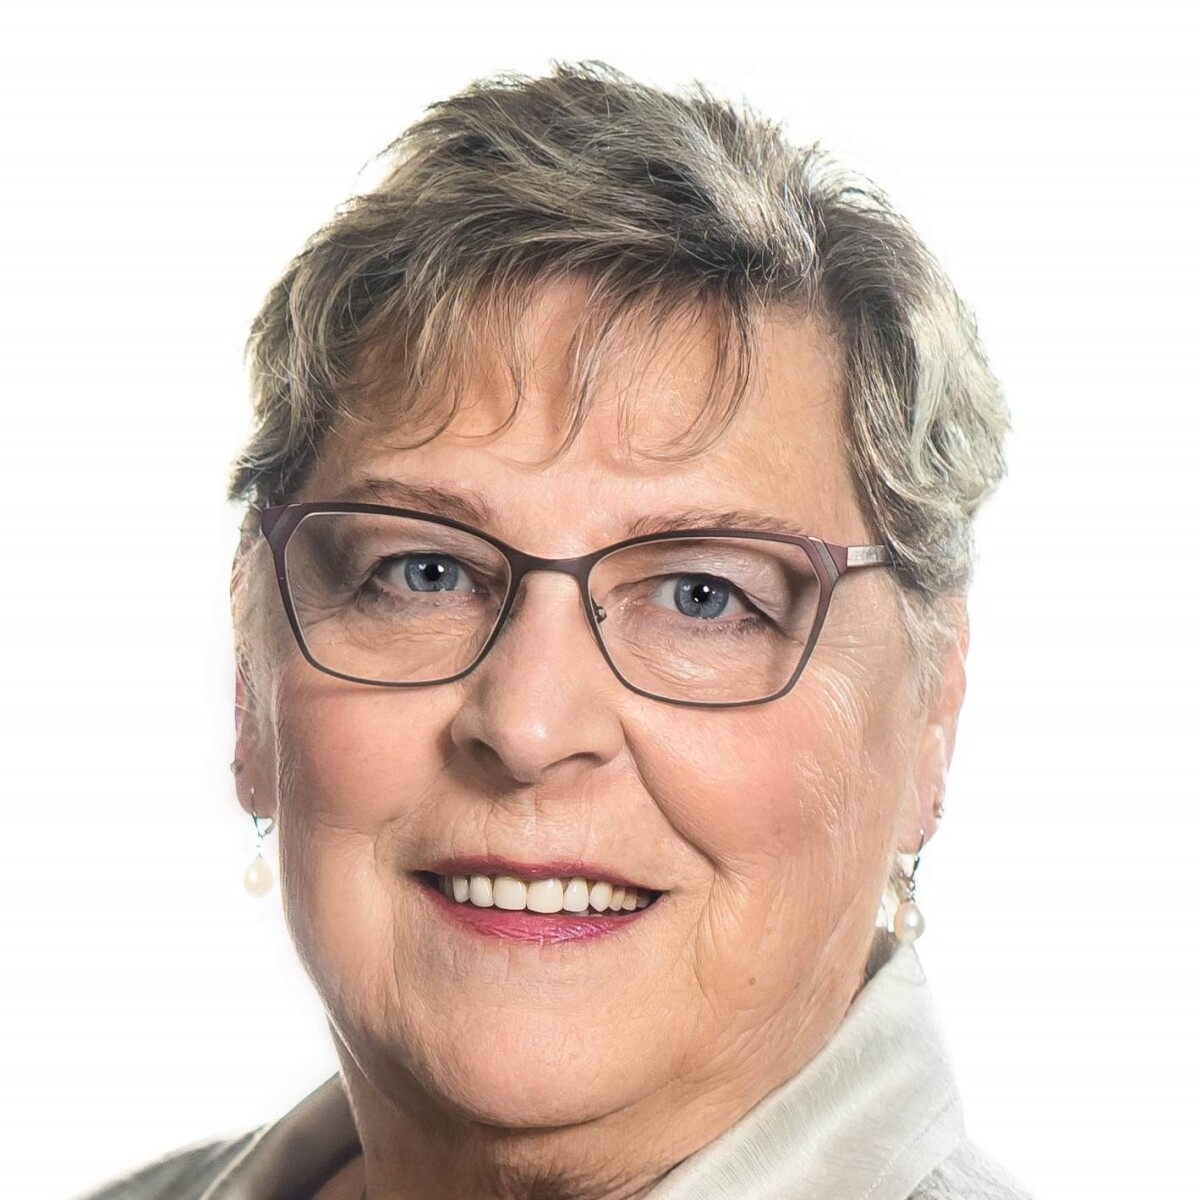 Marion Koepke